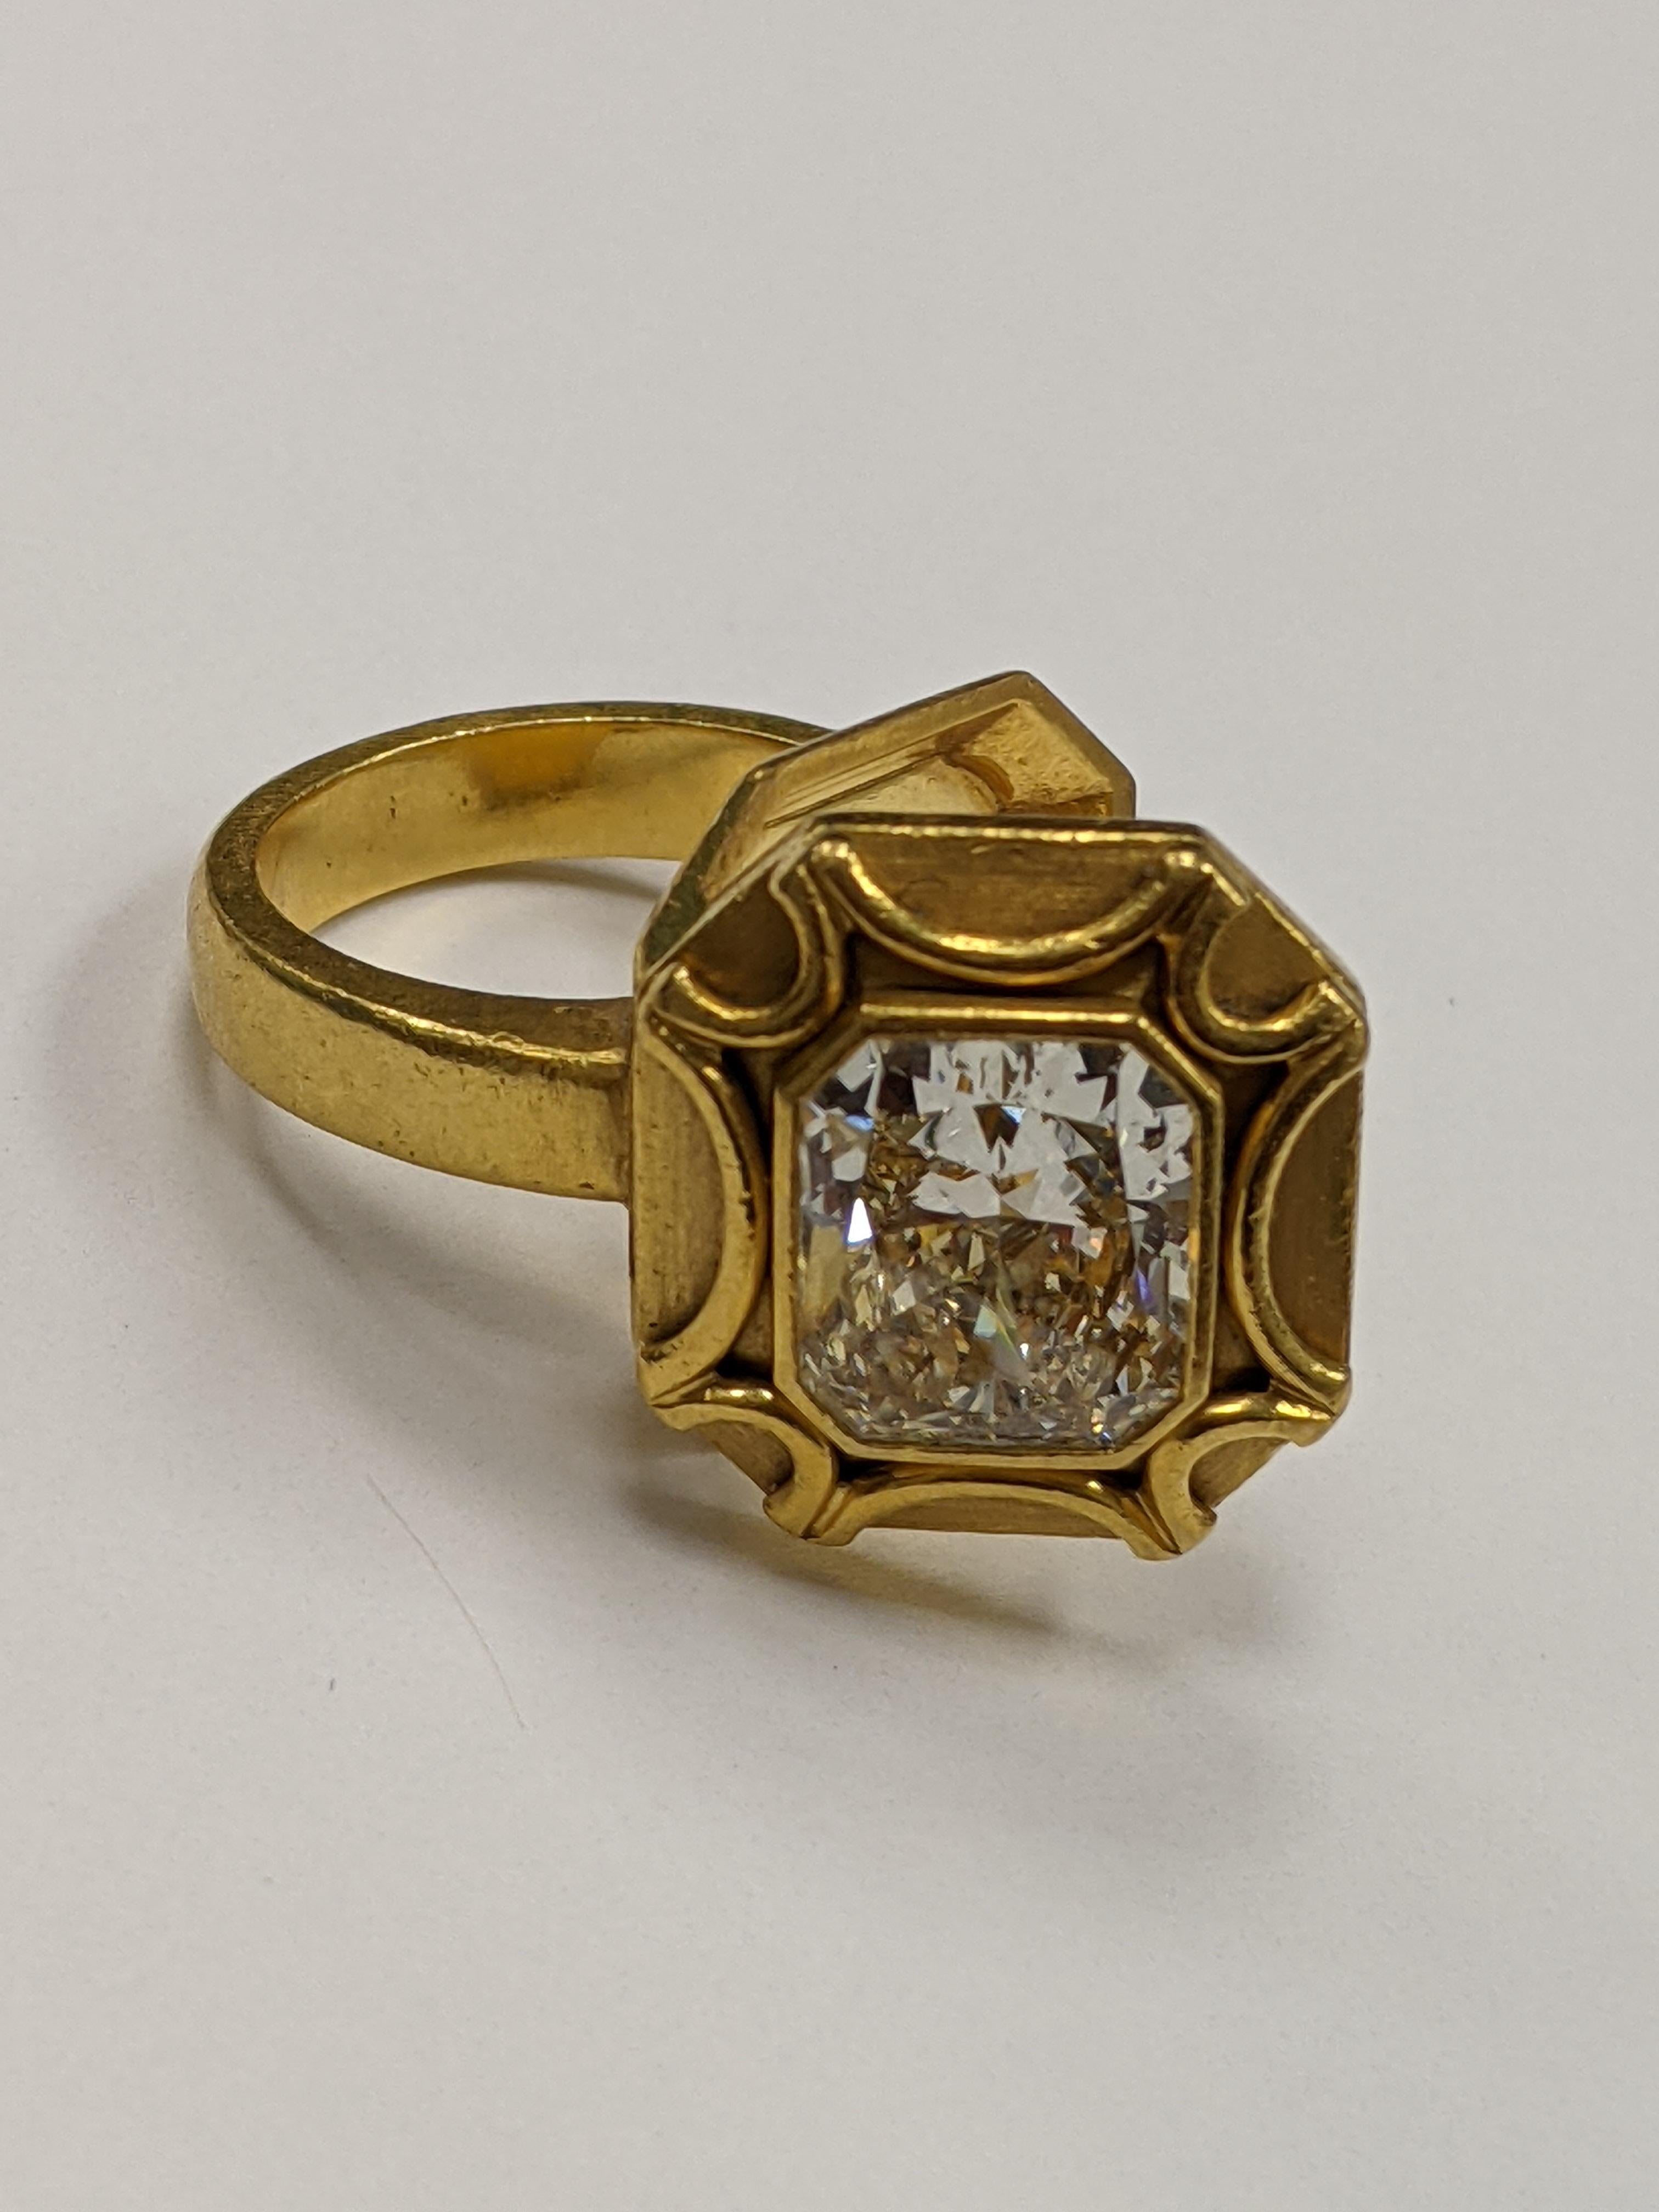 4 Carat Diamond Opening Mogul Ring in 22k Yellow Gold, Estate 1